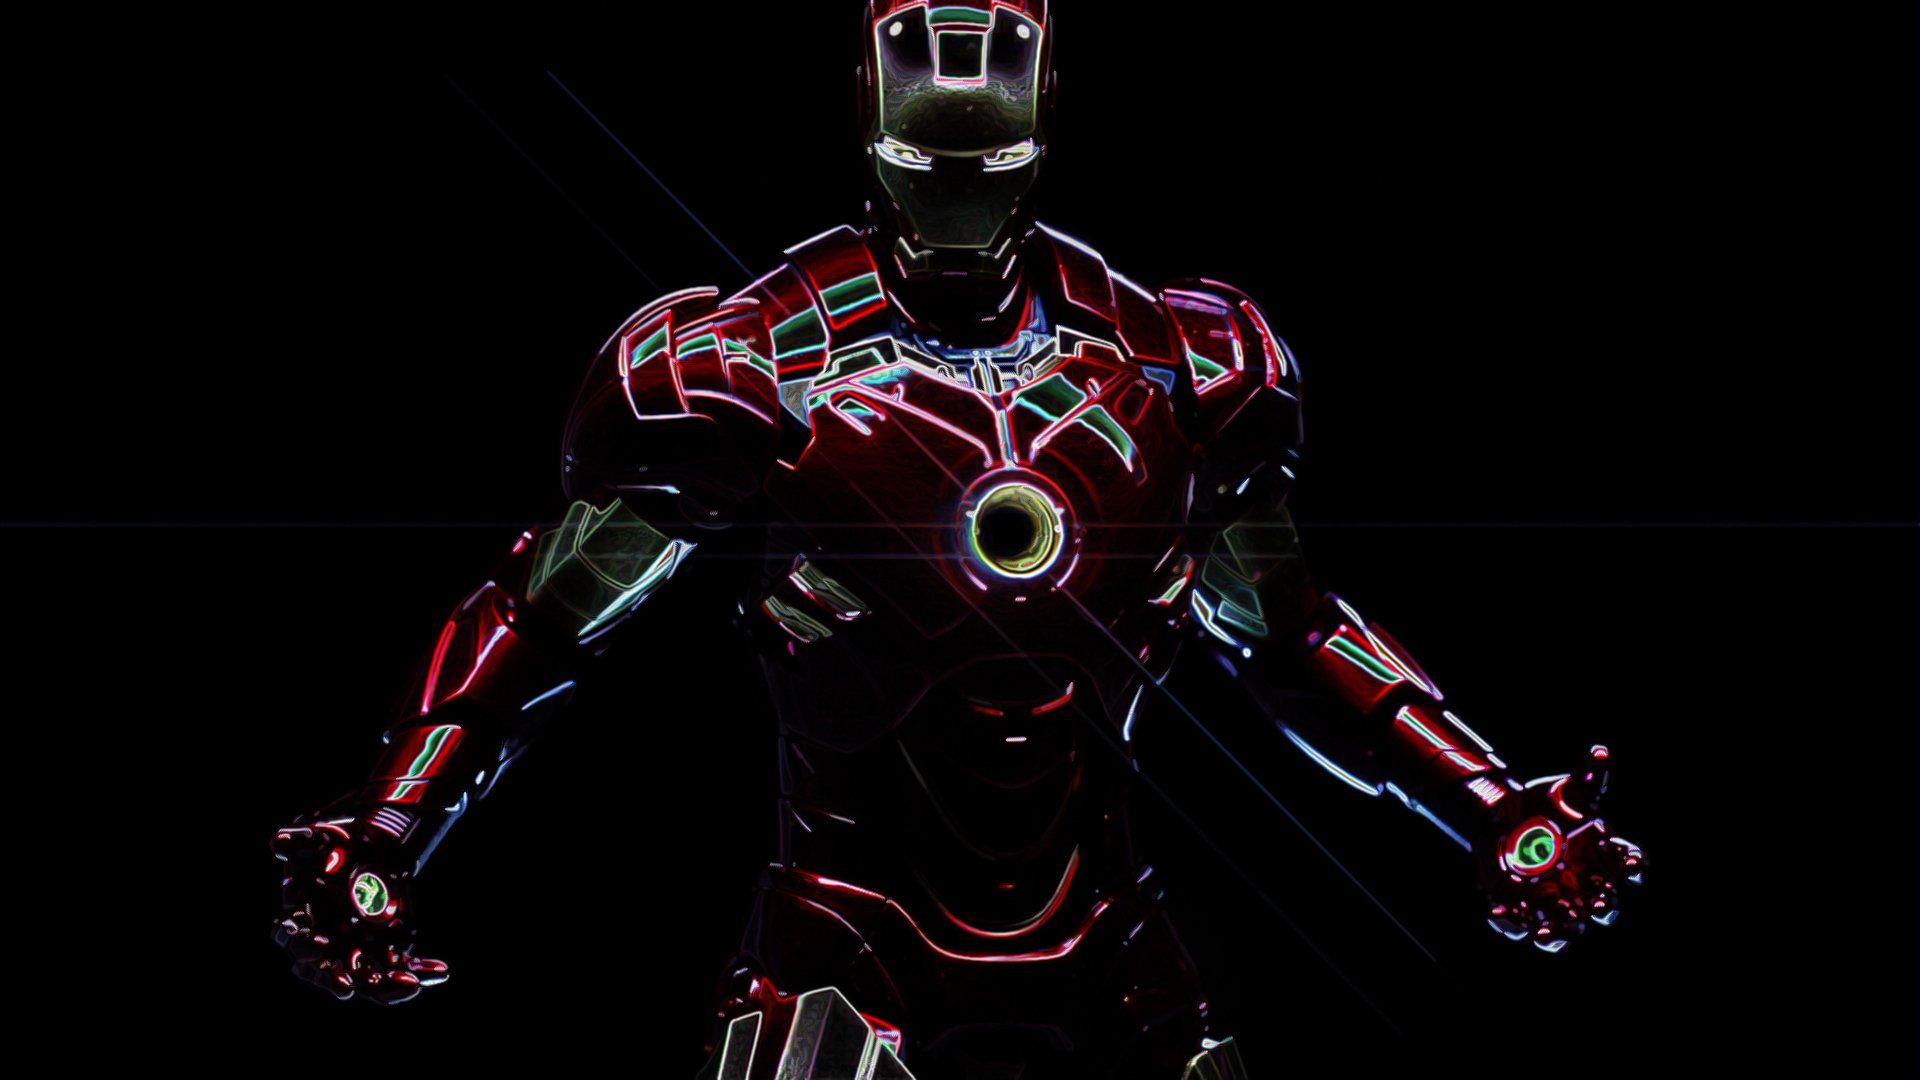 Iron Man Foto, Imagen hd de iron man gratis, # 16554